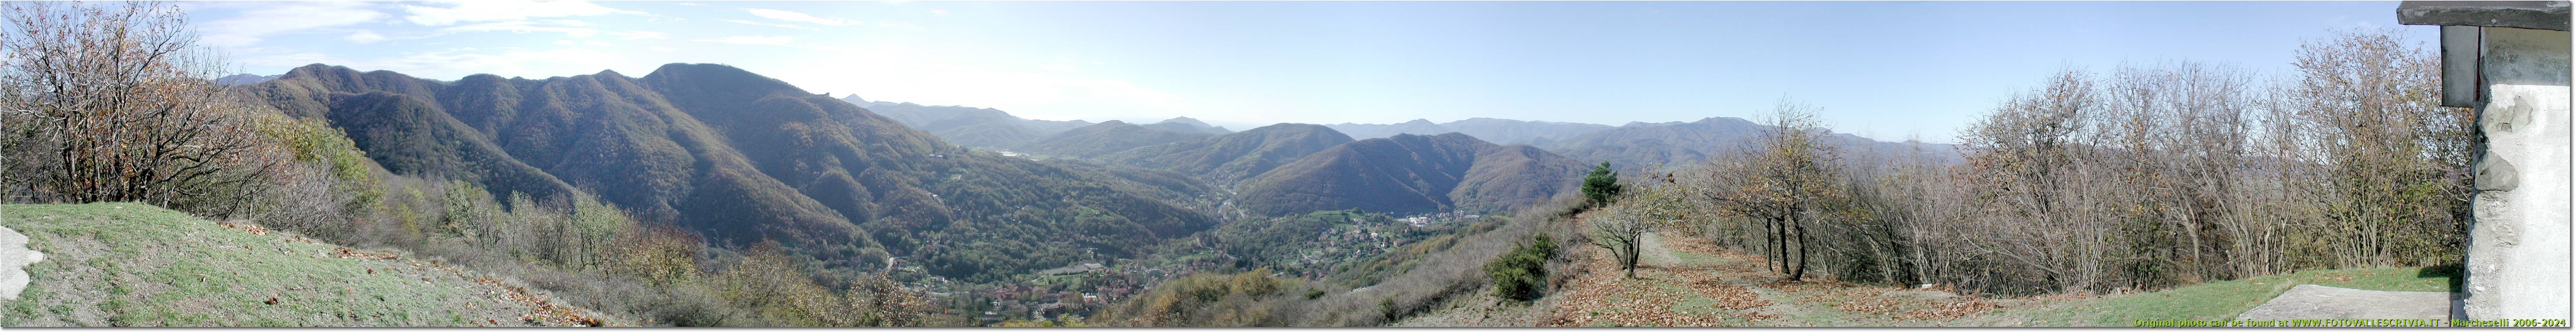 Valle Scrivia dal M. Pianetto - Savignone - 2005 - Panorami - Inverno - Olympus Camedia 3000